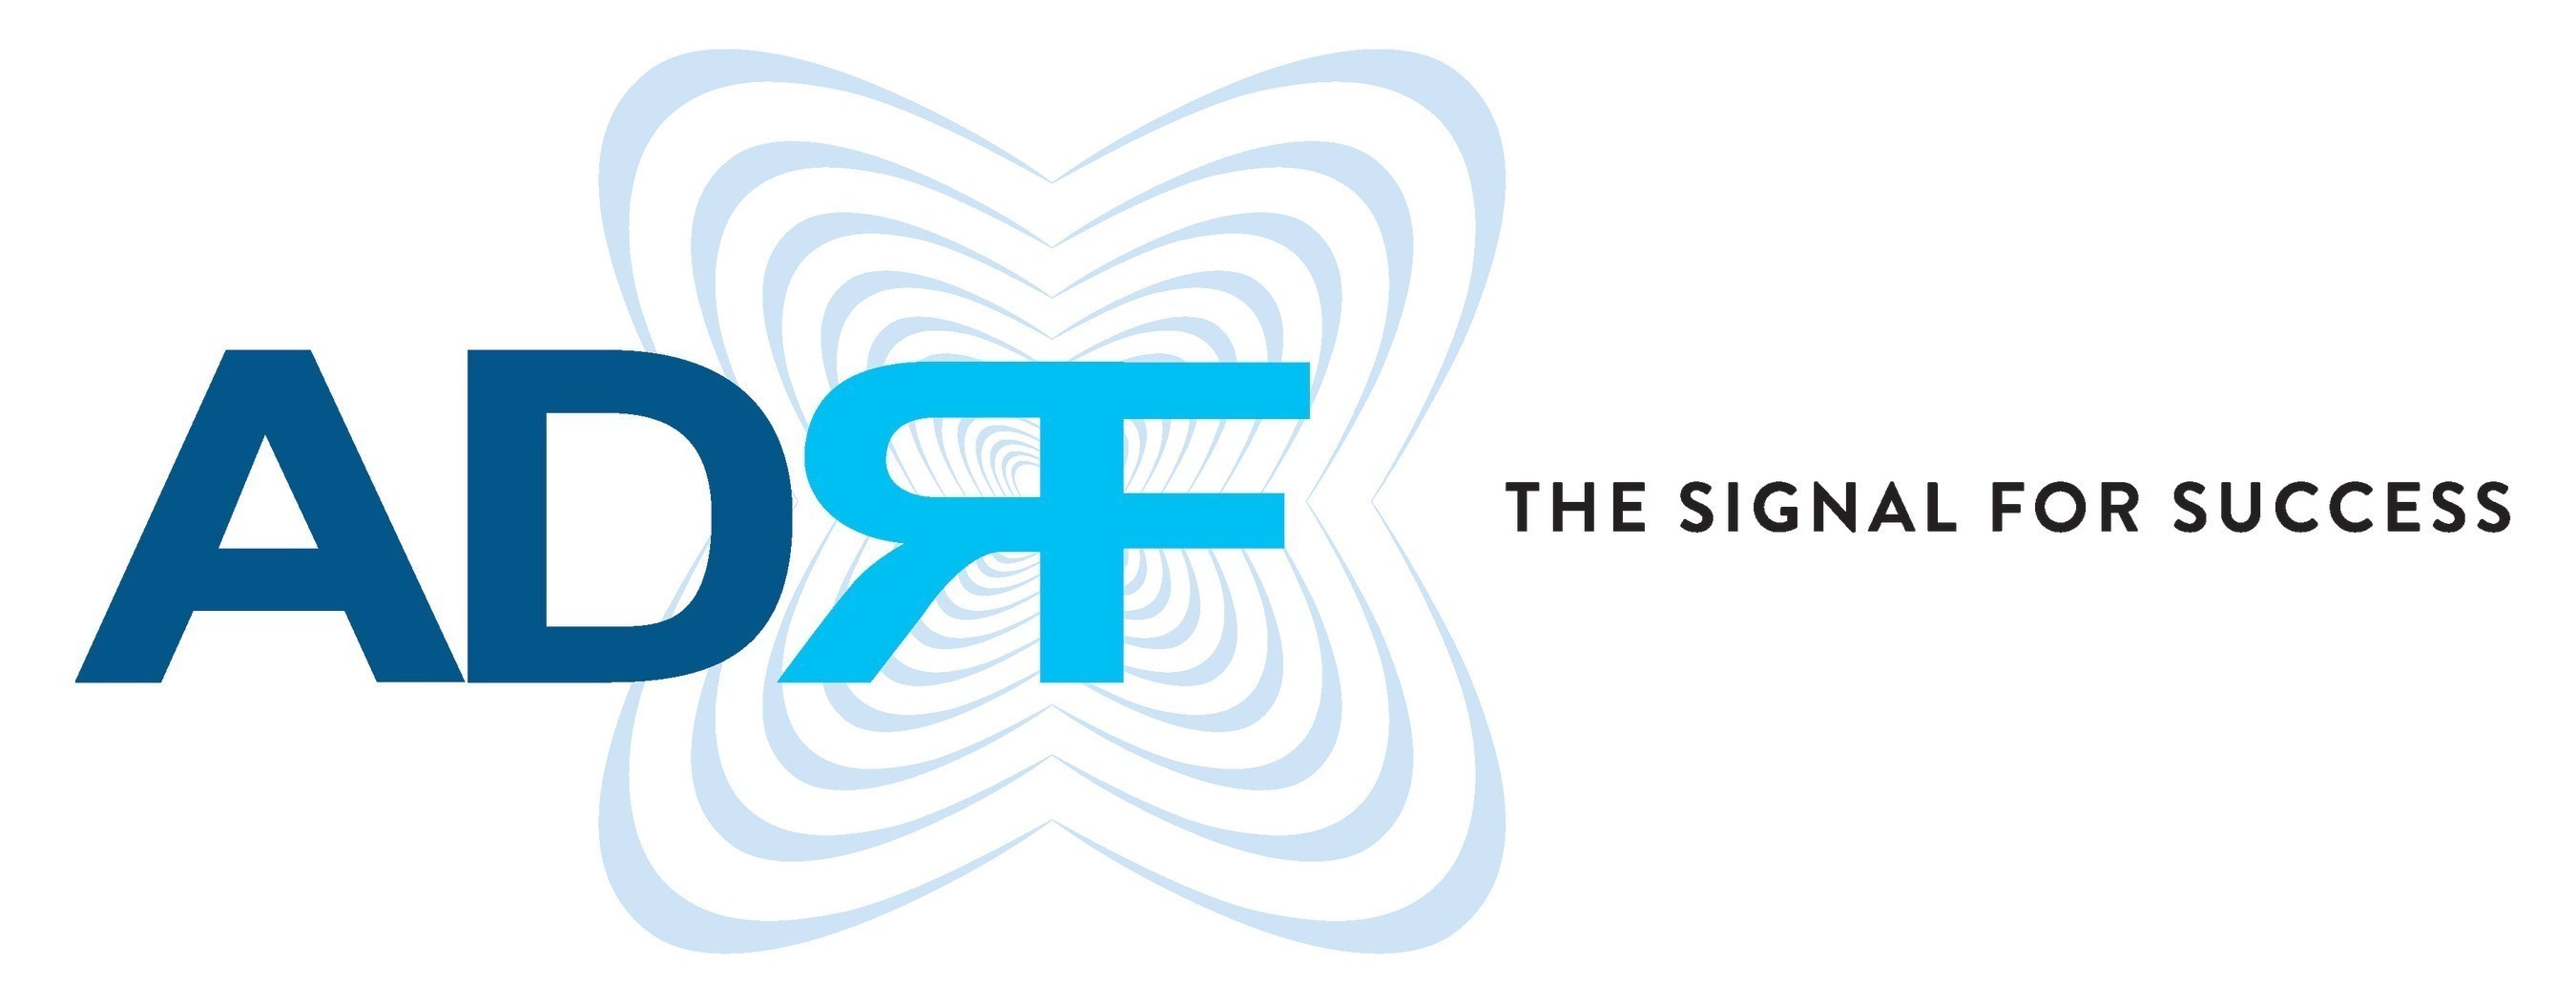 ADRF - The Signal For Success (PRNewsFoto/Advanced RF Technologies, Inc.)